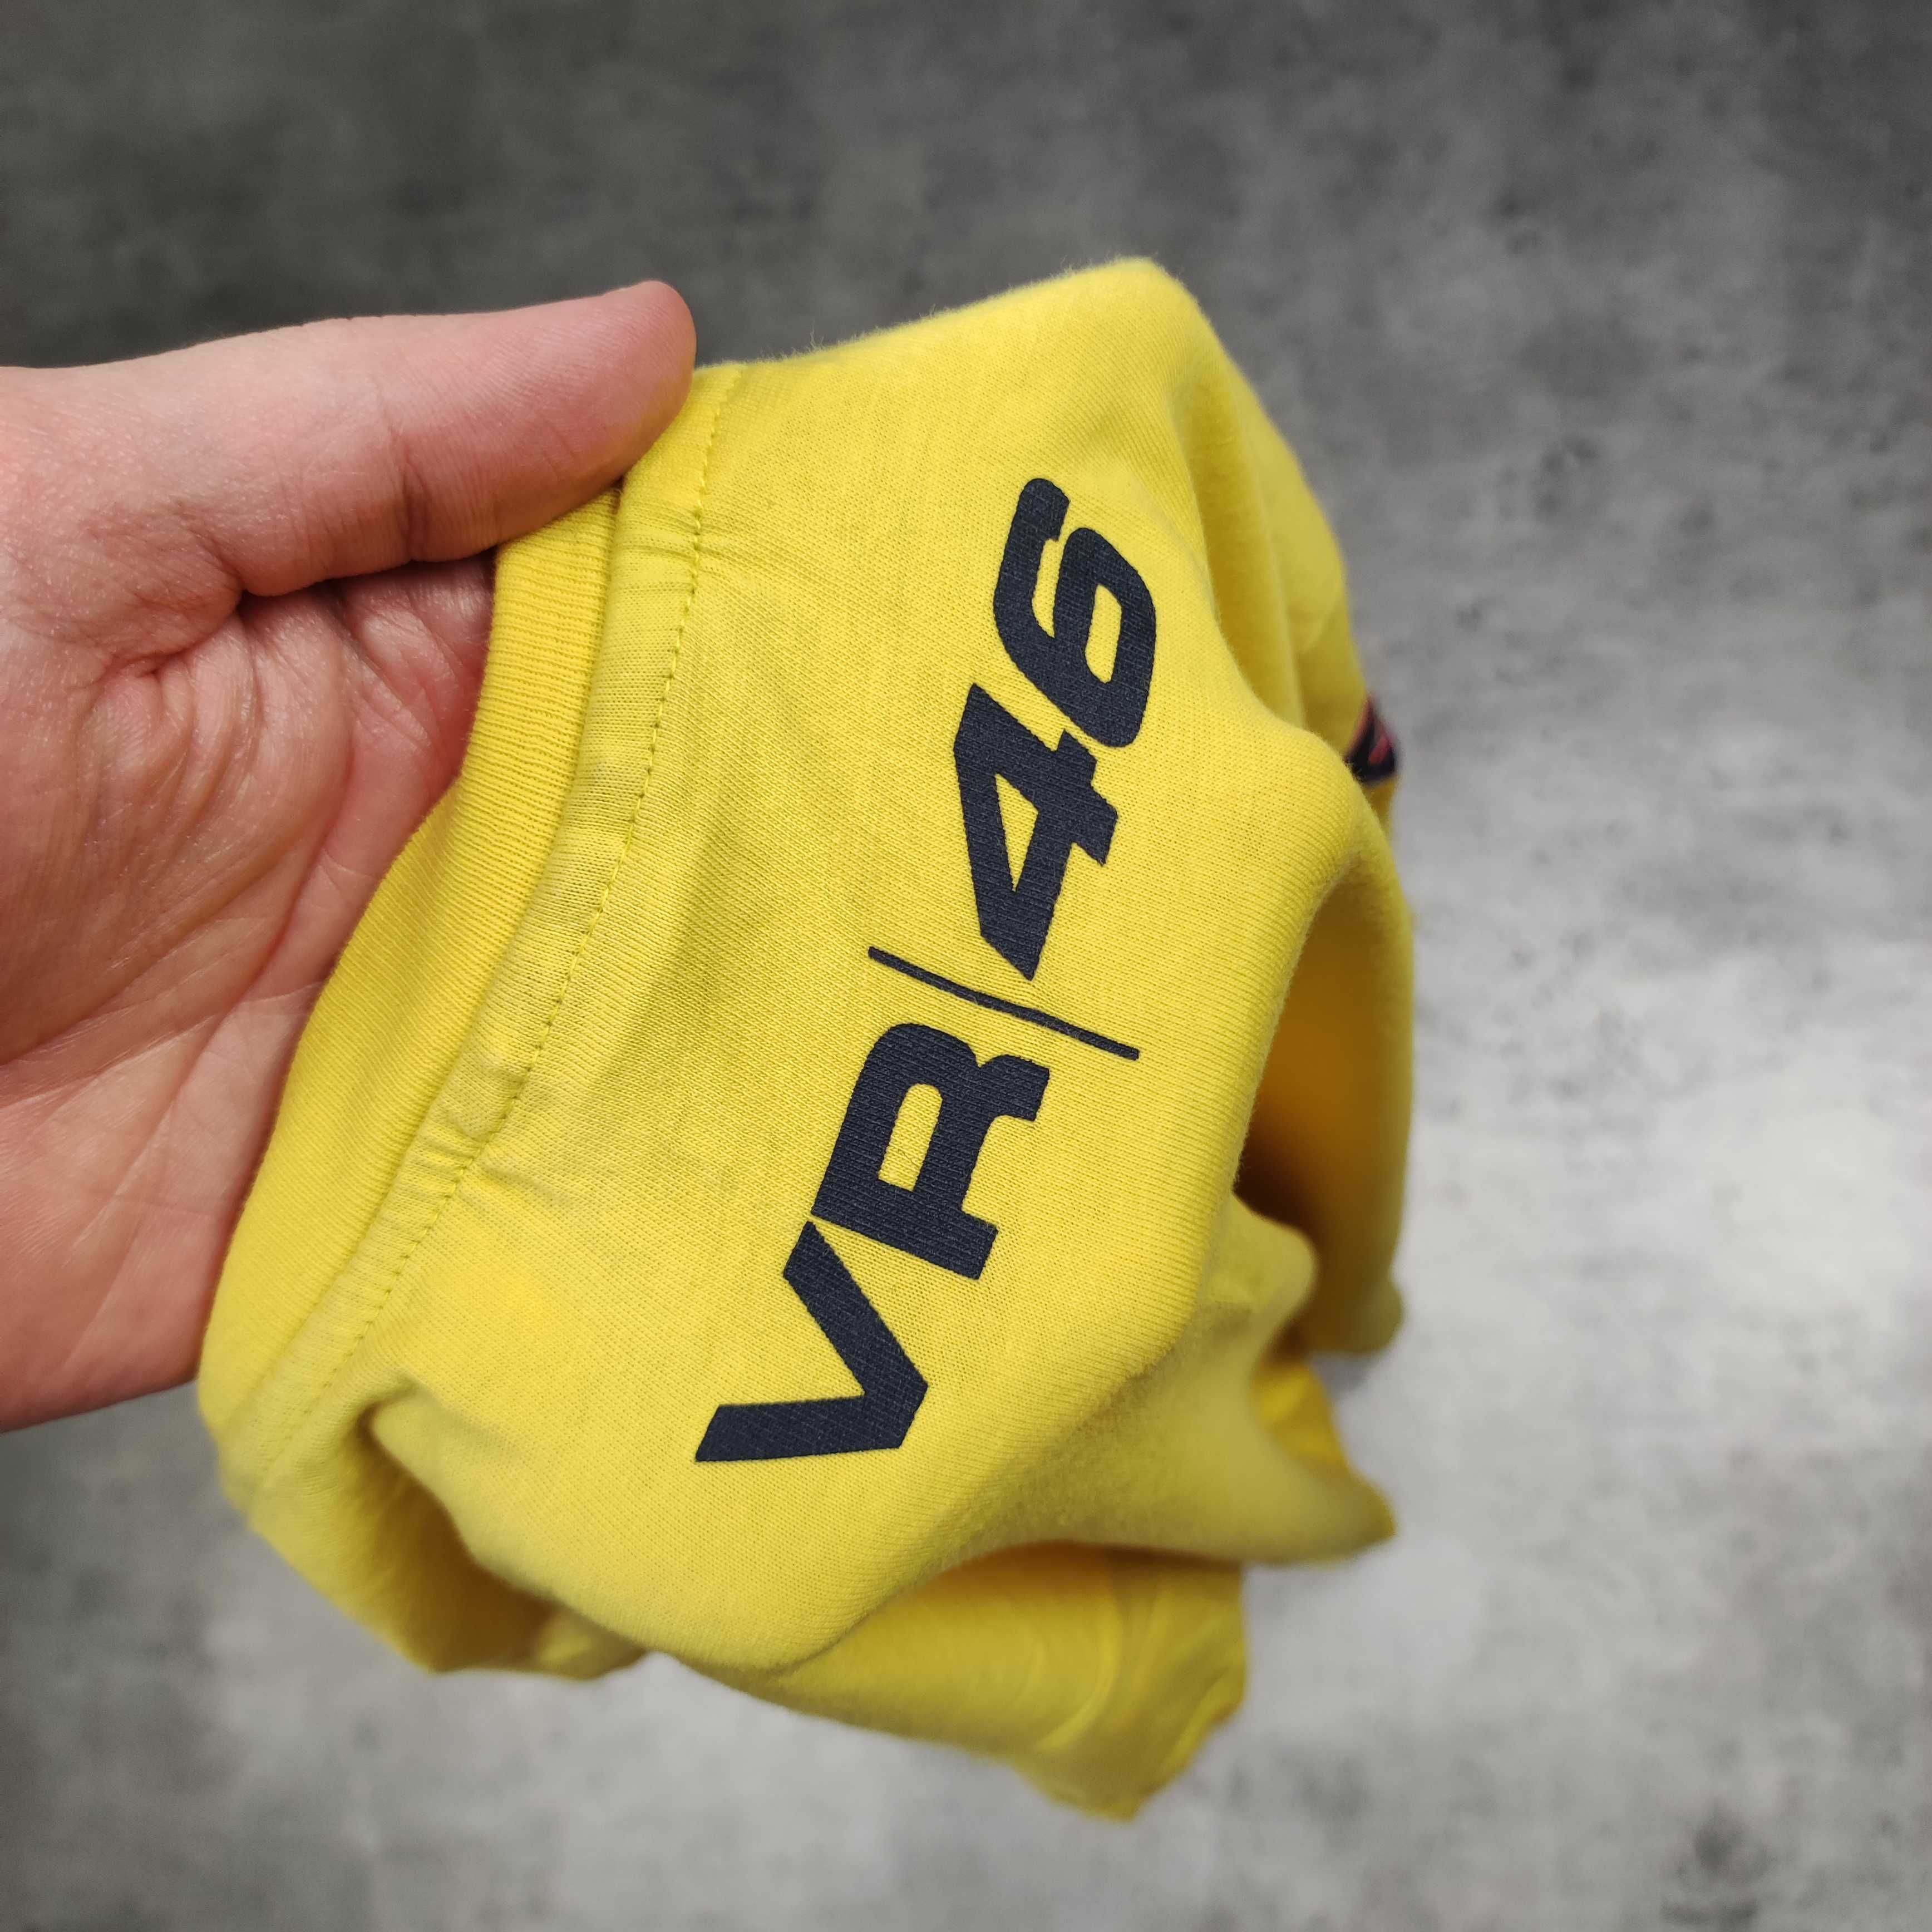 MĘSKA Koszulka Wyścigowa FIAT Yamaha VR46 Racing Żółta Duża Grafika